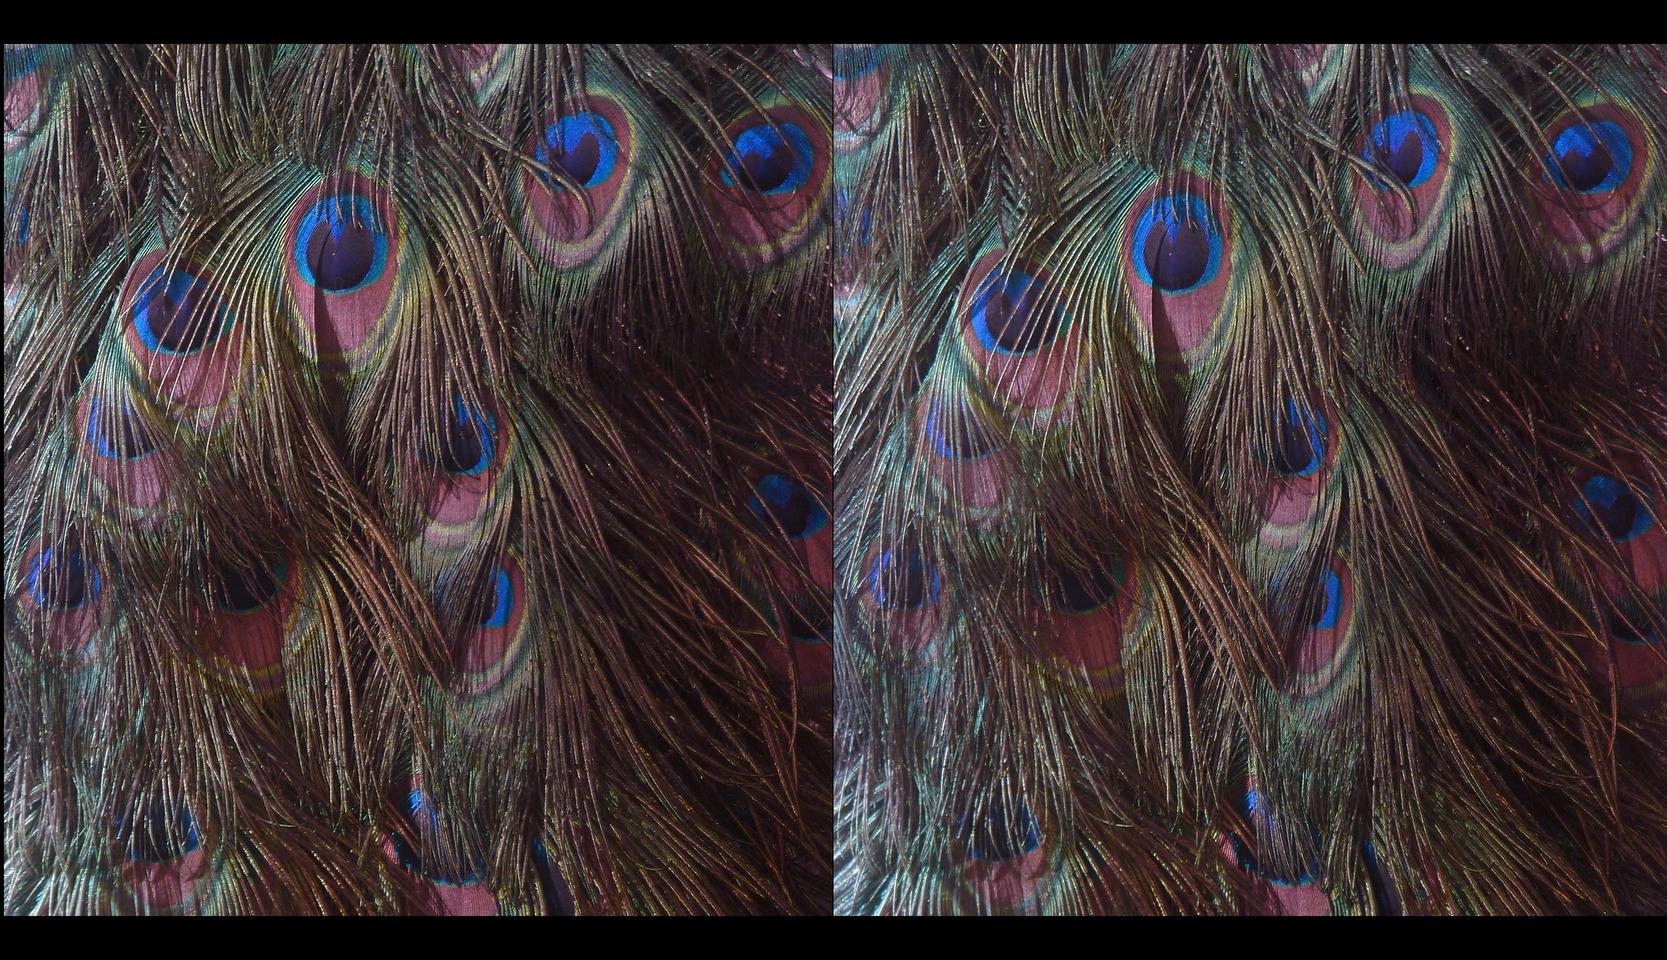 Fasan plumage iridescence